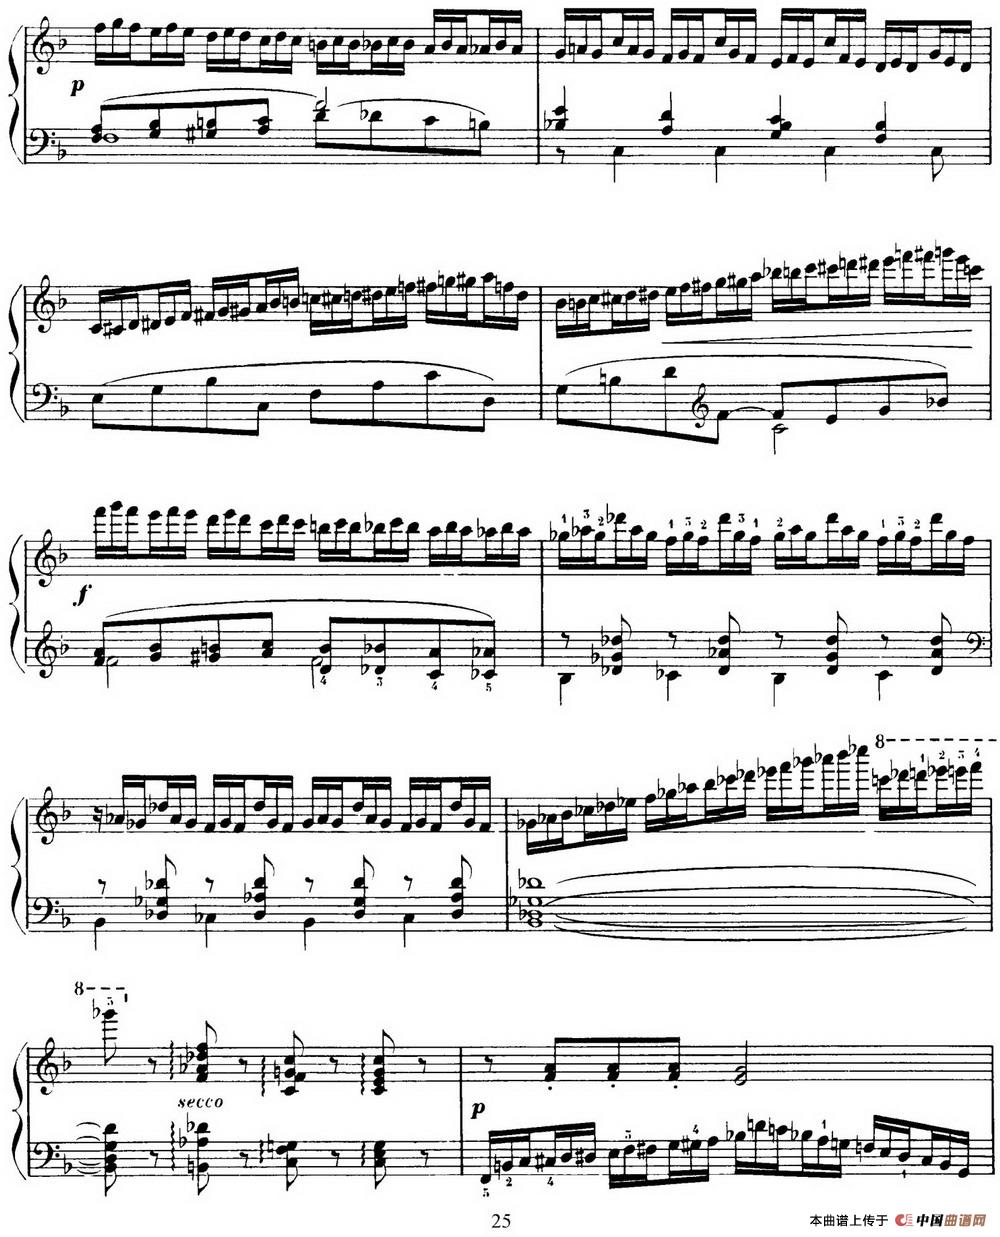 15 Etudes de Virtuosité Op.72 No.6（十五首钢琴练习曲之六）(1)_025.jpg